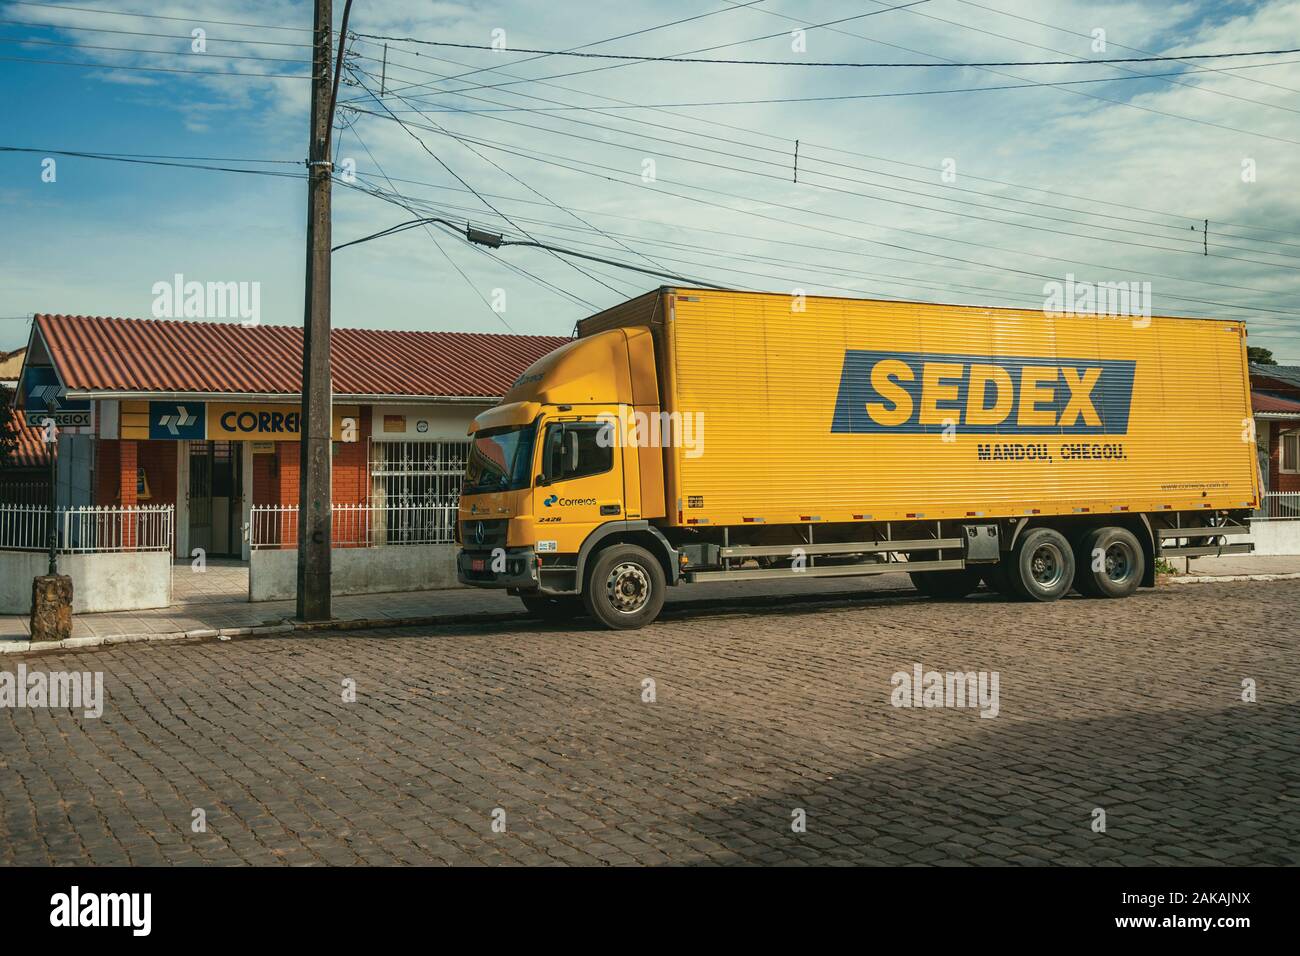 Caminhões brasileiros Mercedes Sprinter - Brazilian Delivery Truck